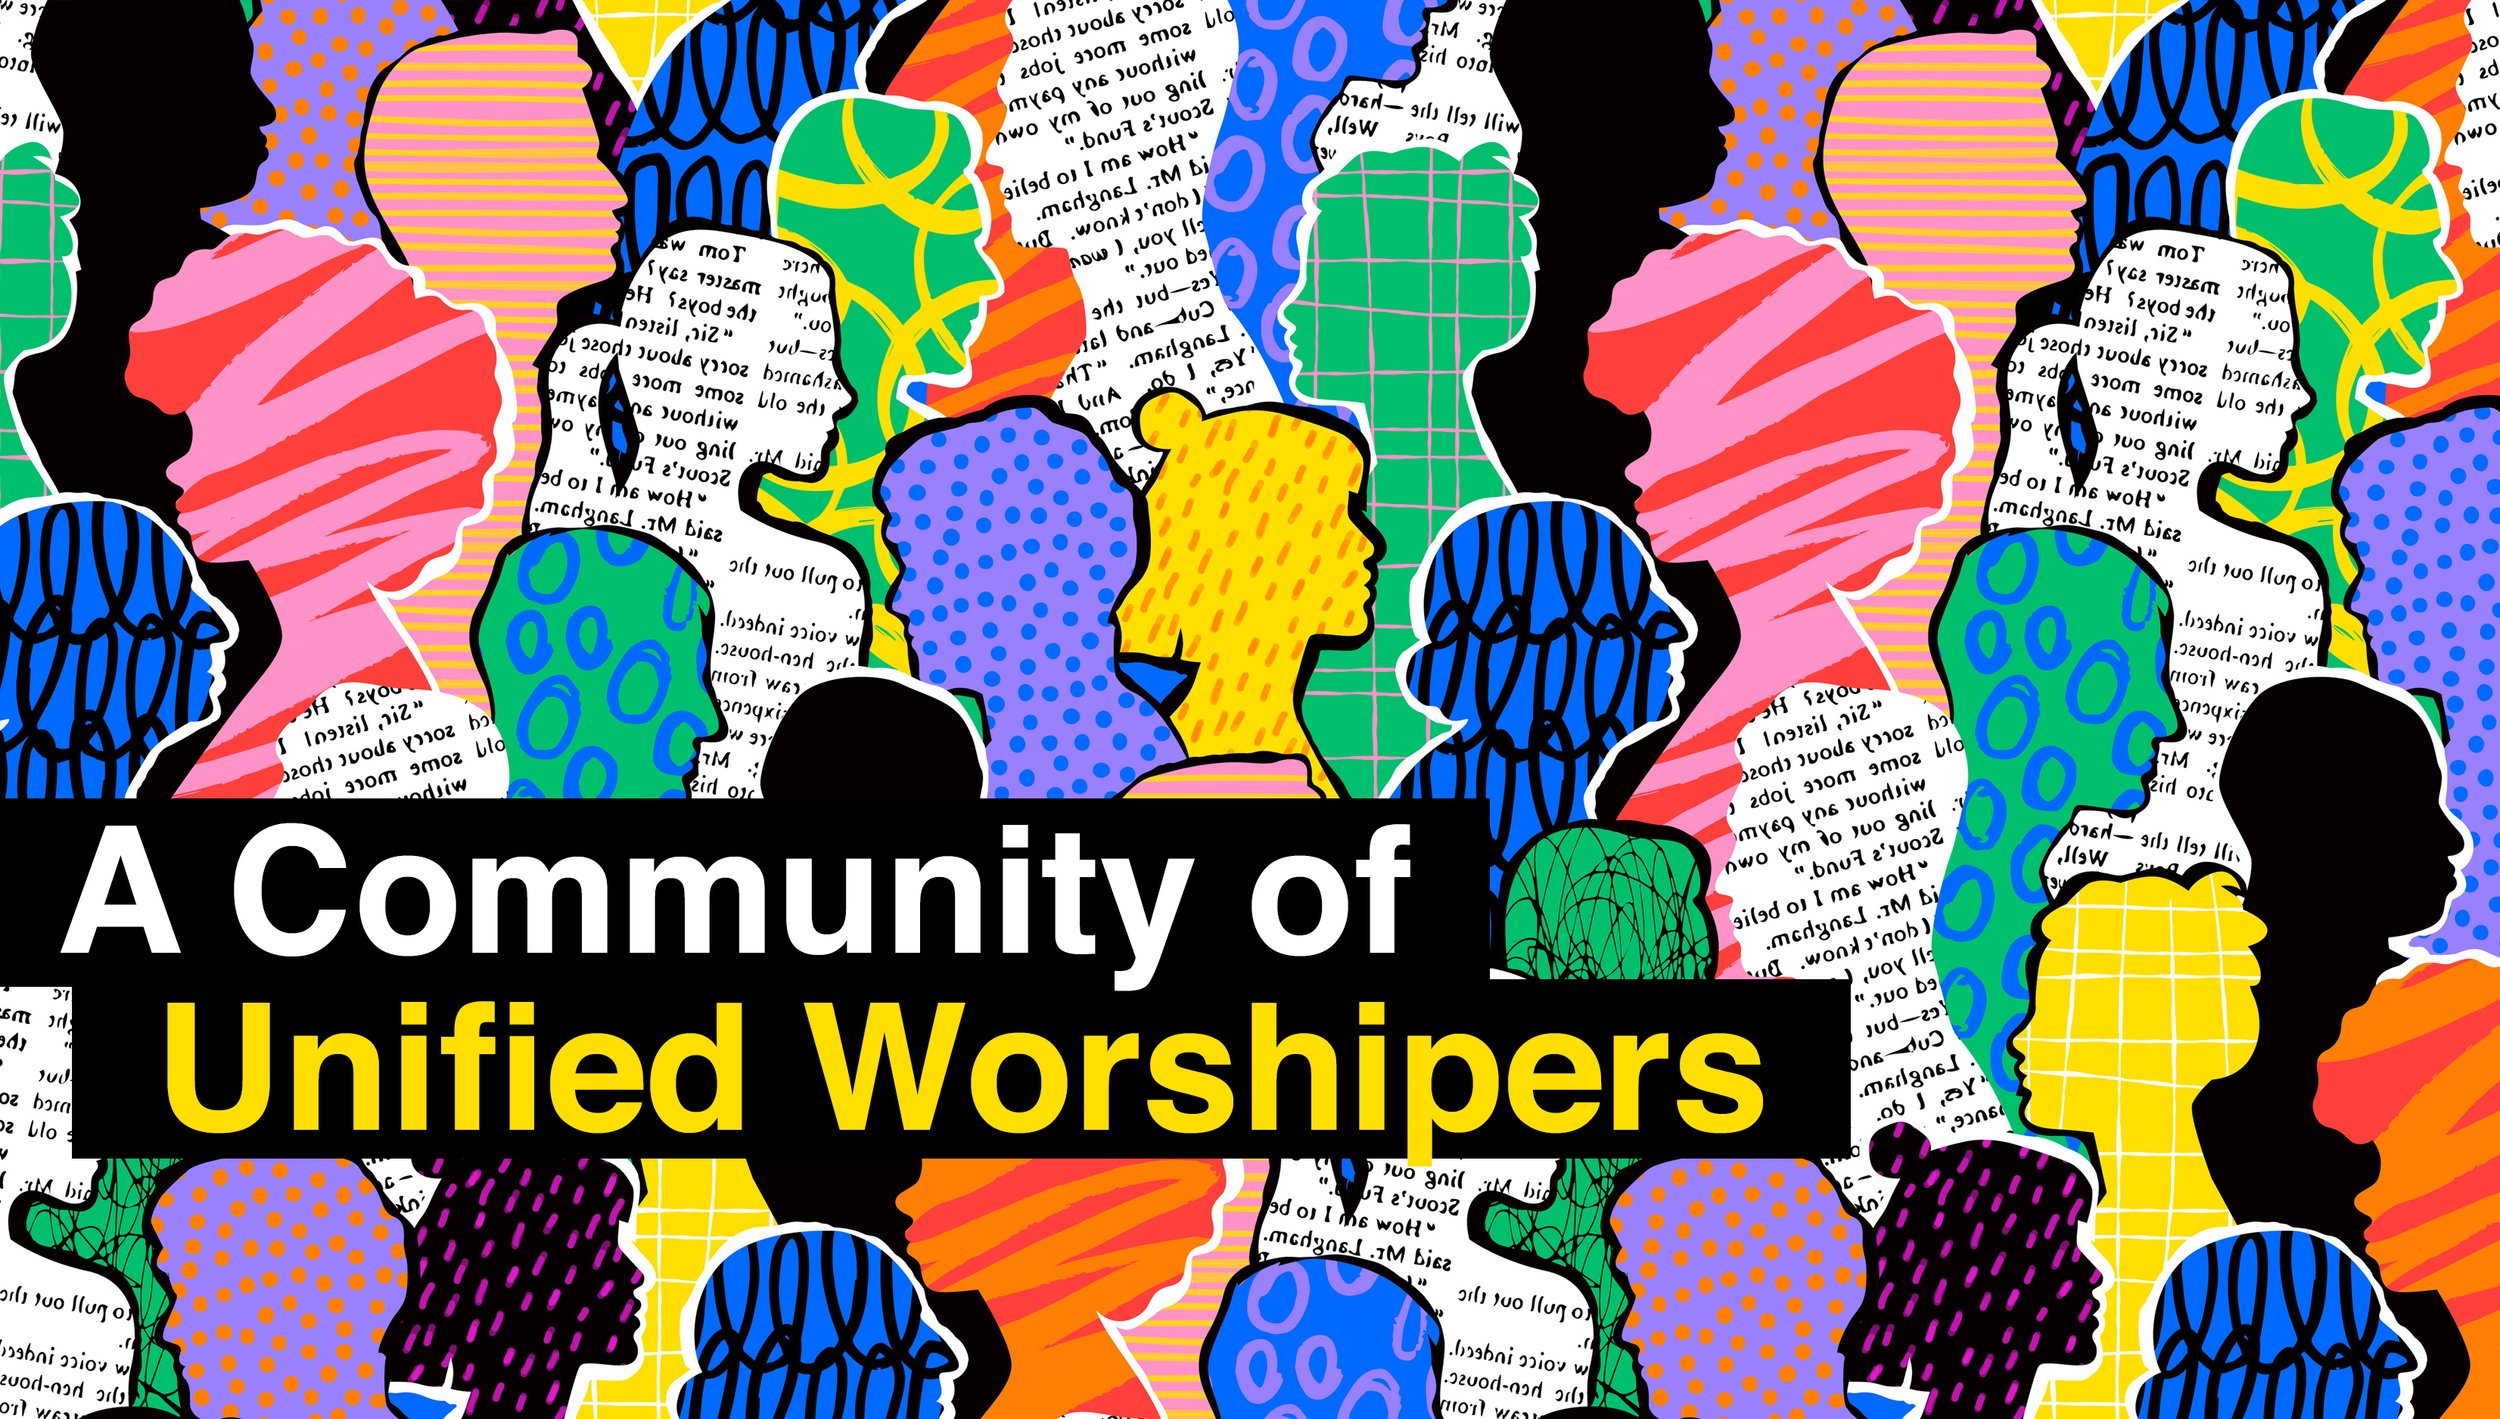 unified worshipers.jpg